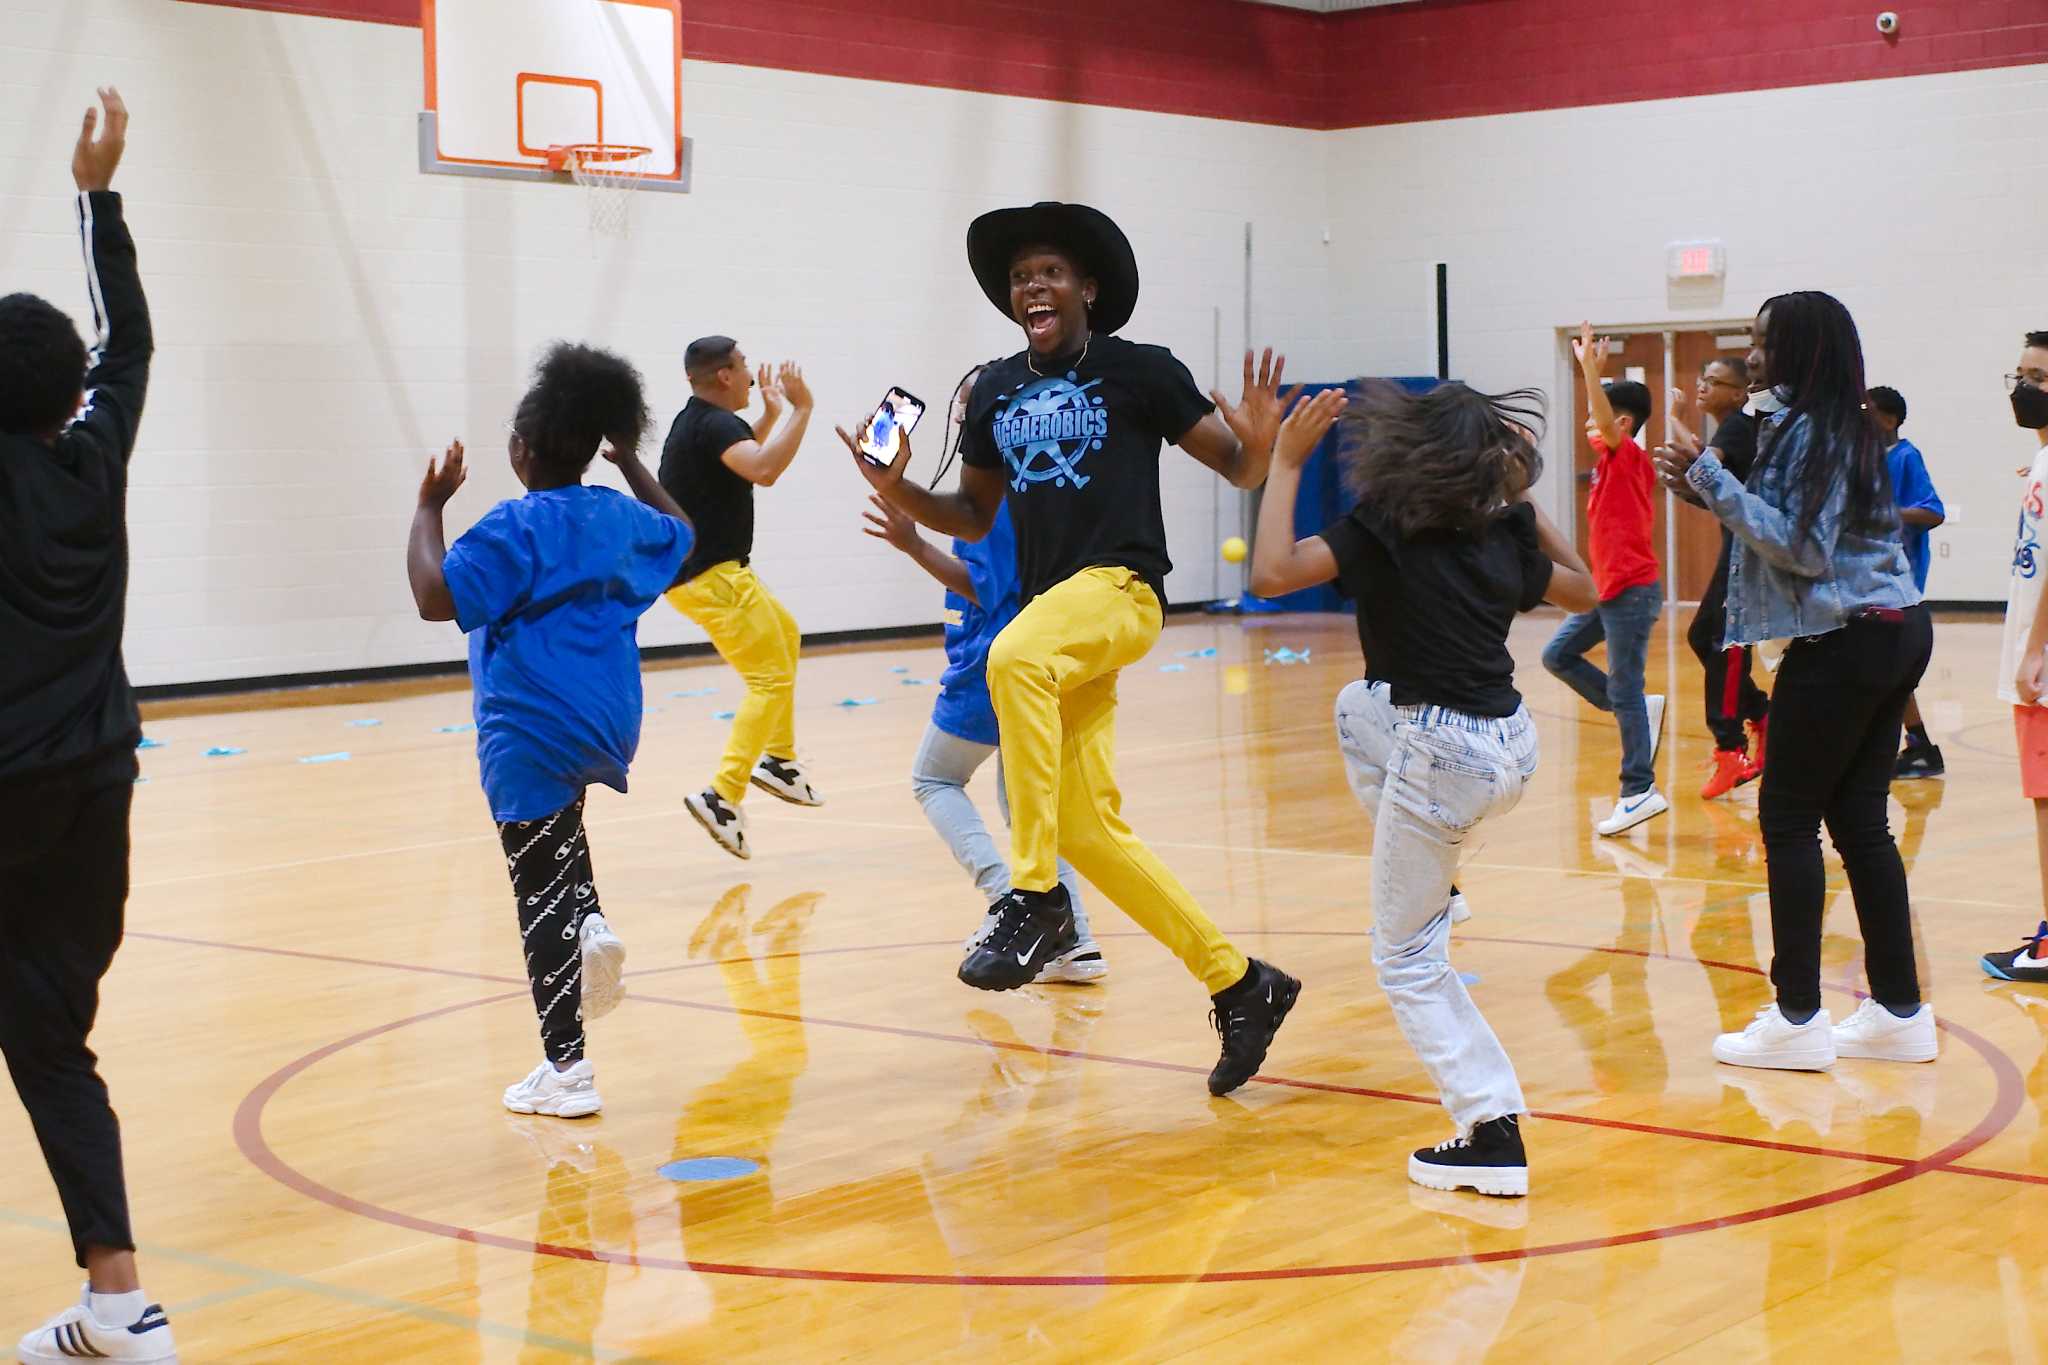 JiggAerobics gets kids moving at Boys and Girls Club after-school program